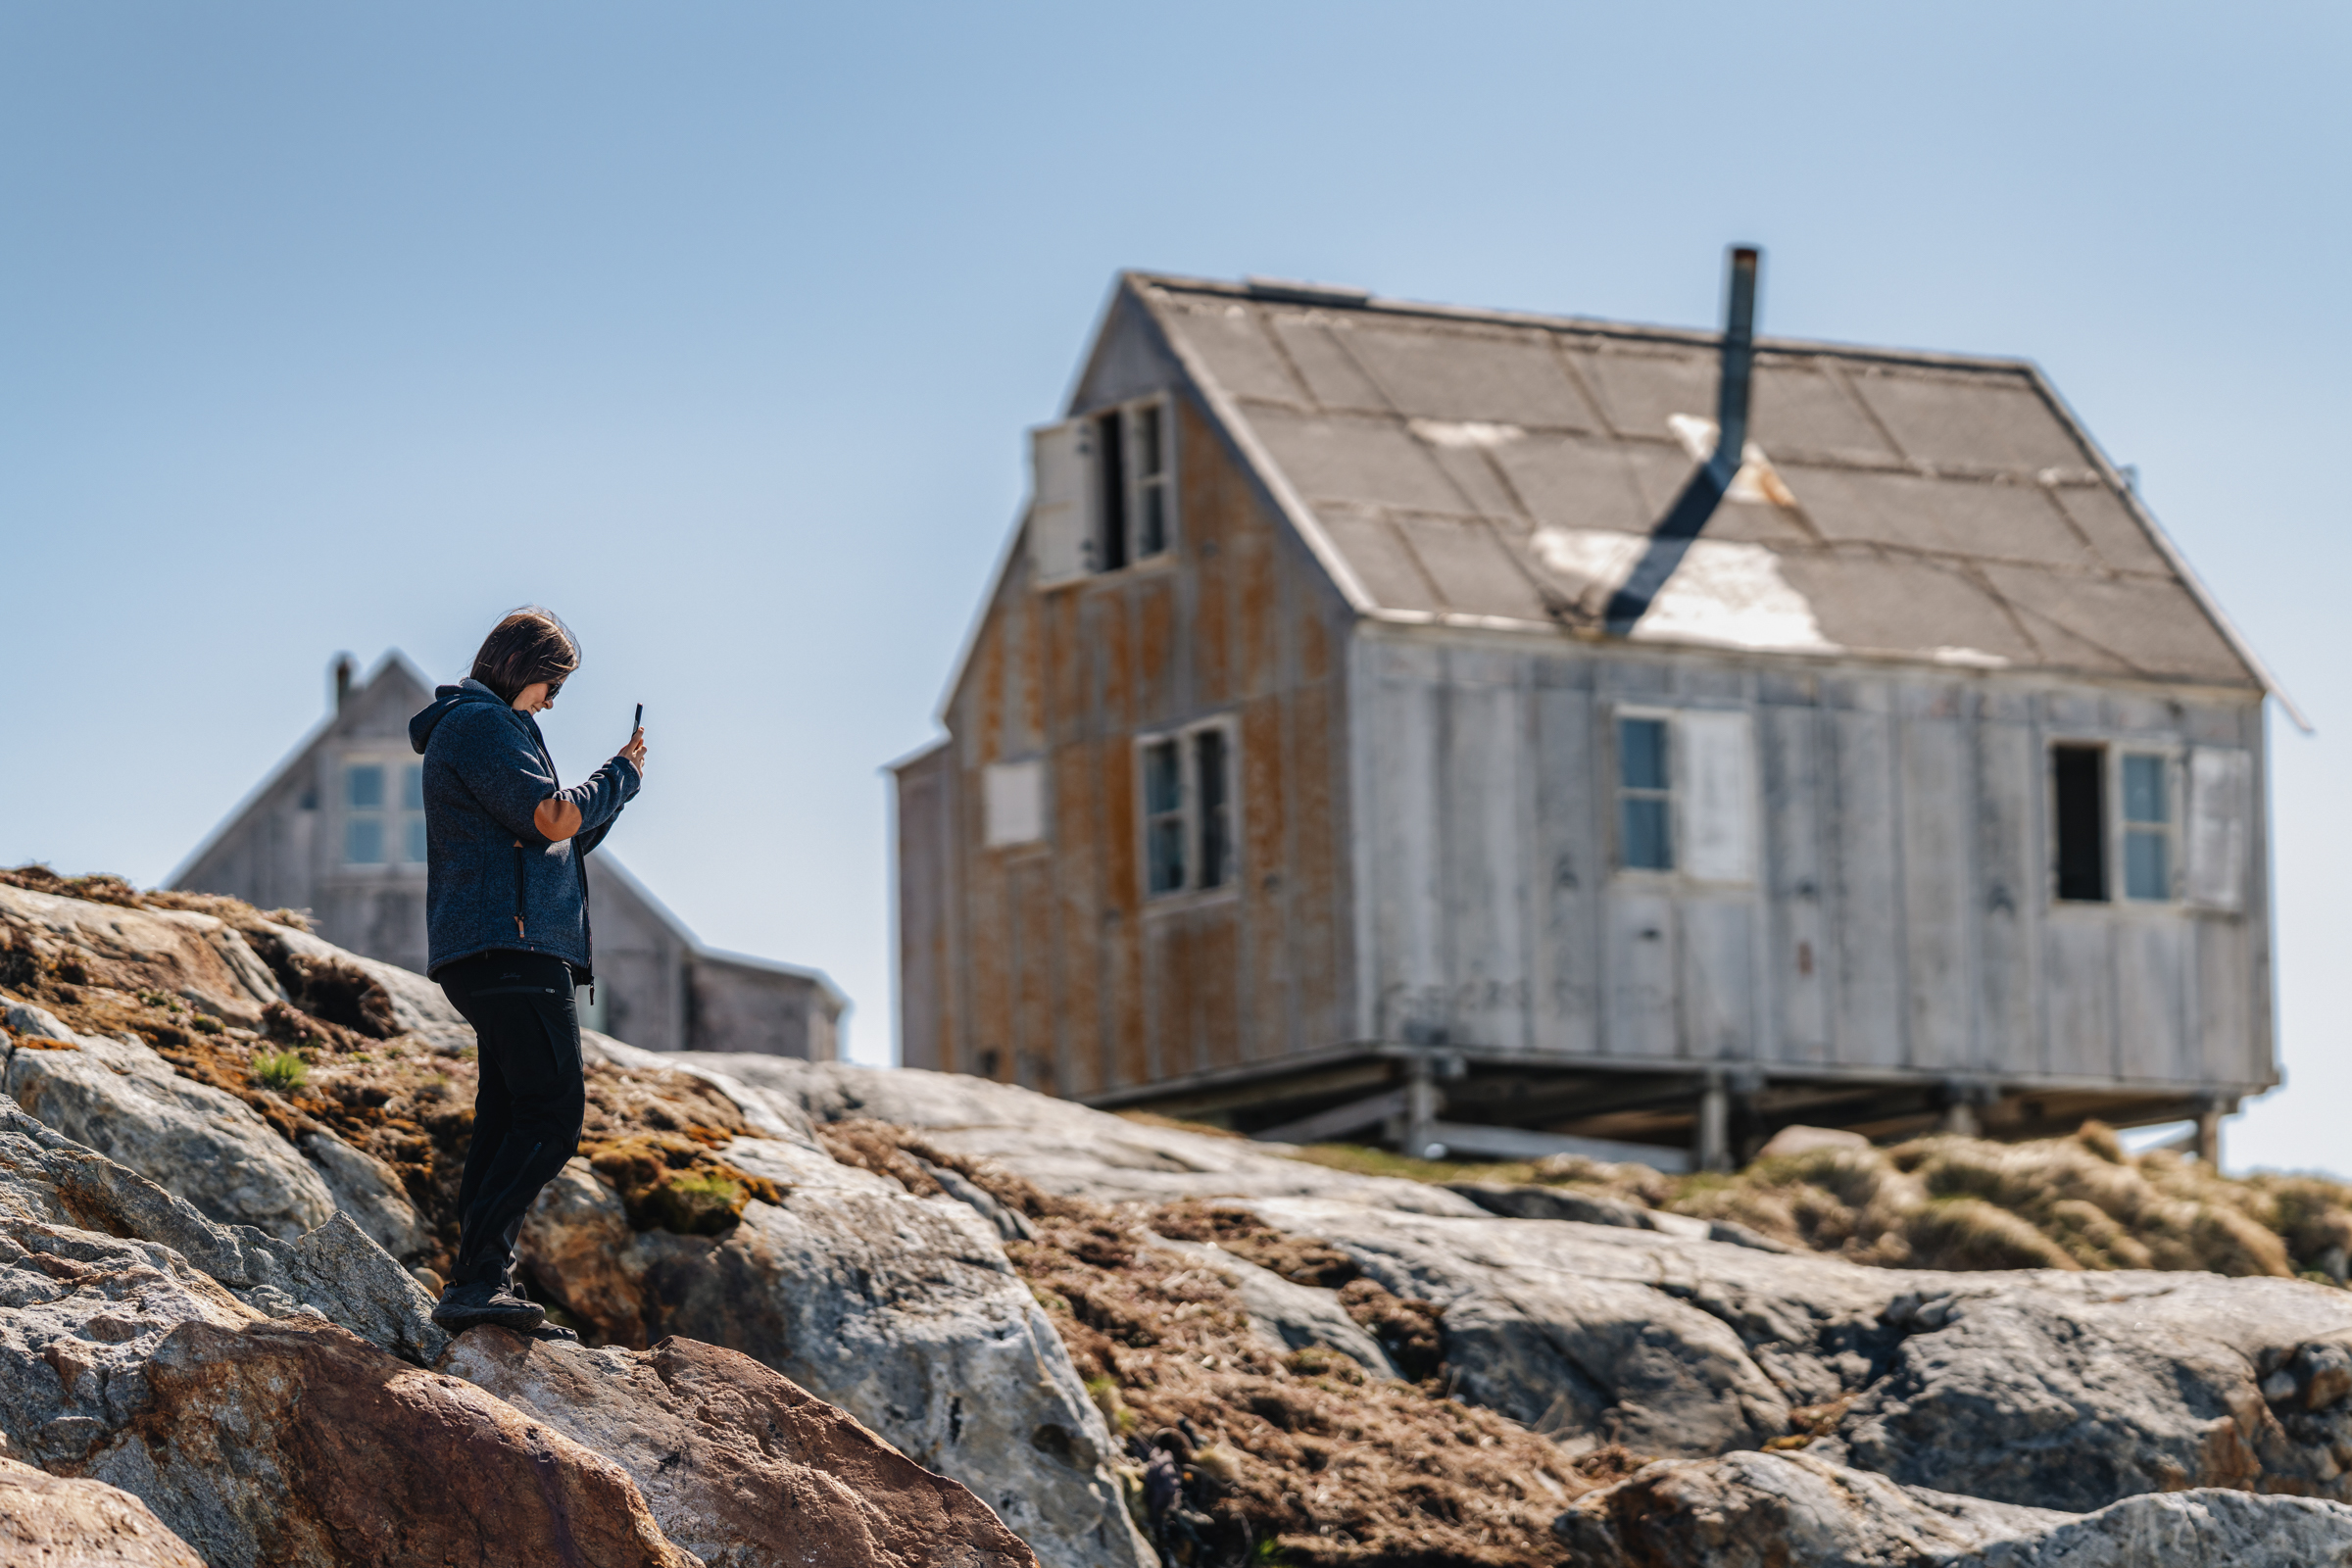 Tourist capturing the moment in Tiilerilaaq. Photo by Filip Gielda - Visit East Greenland